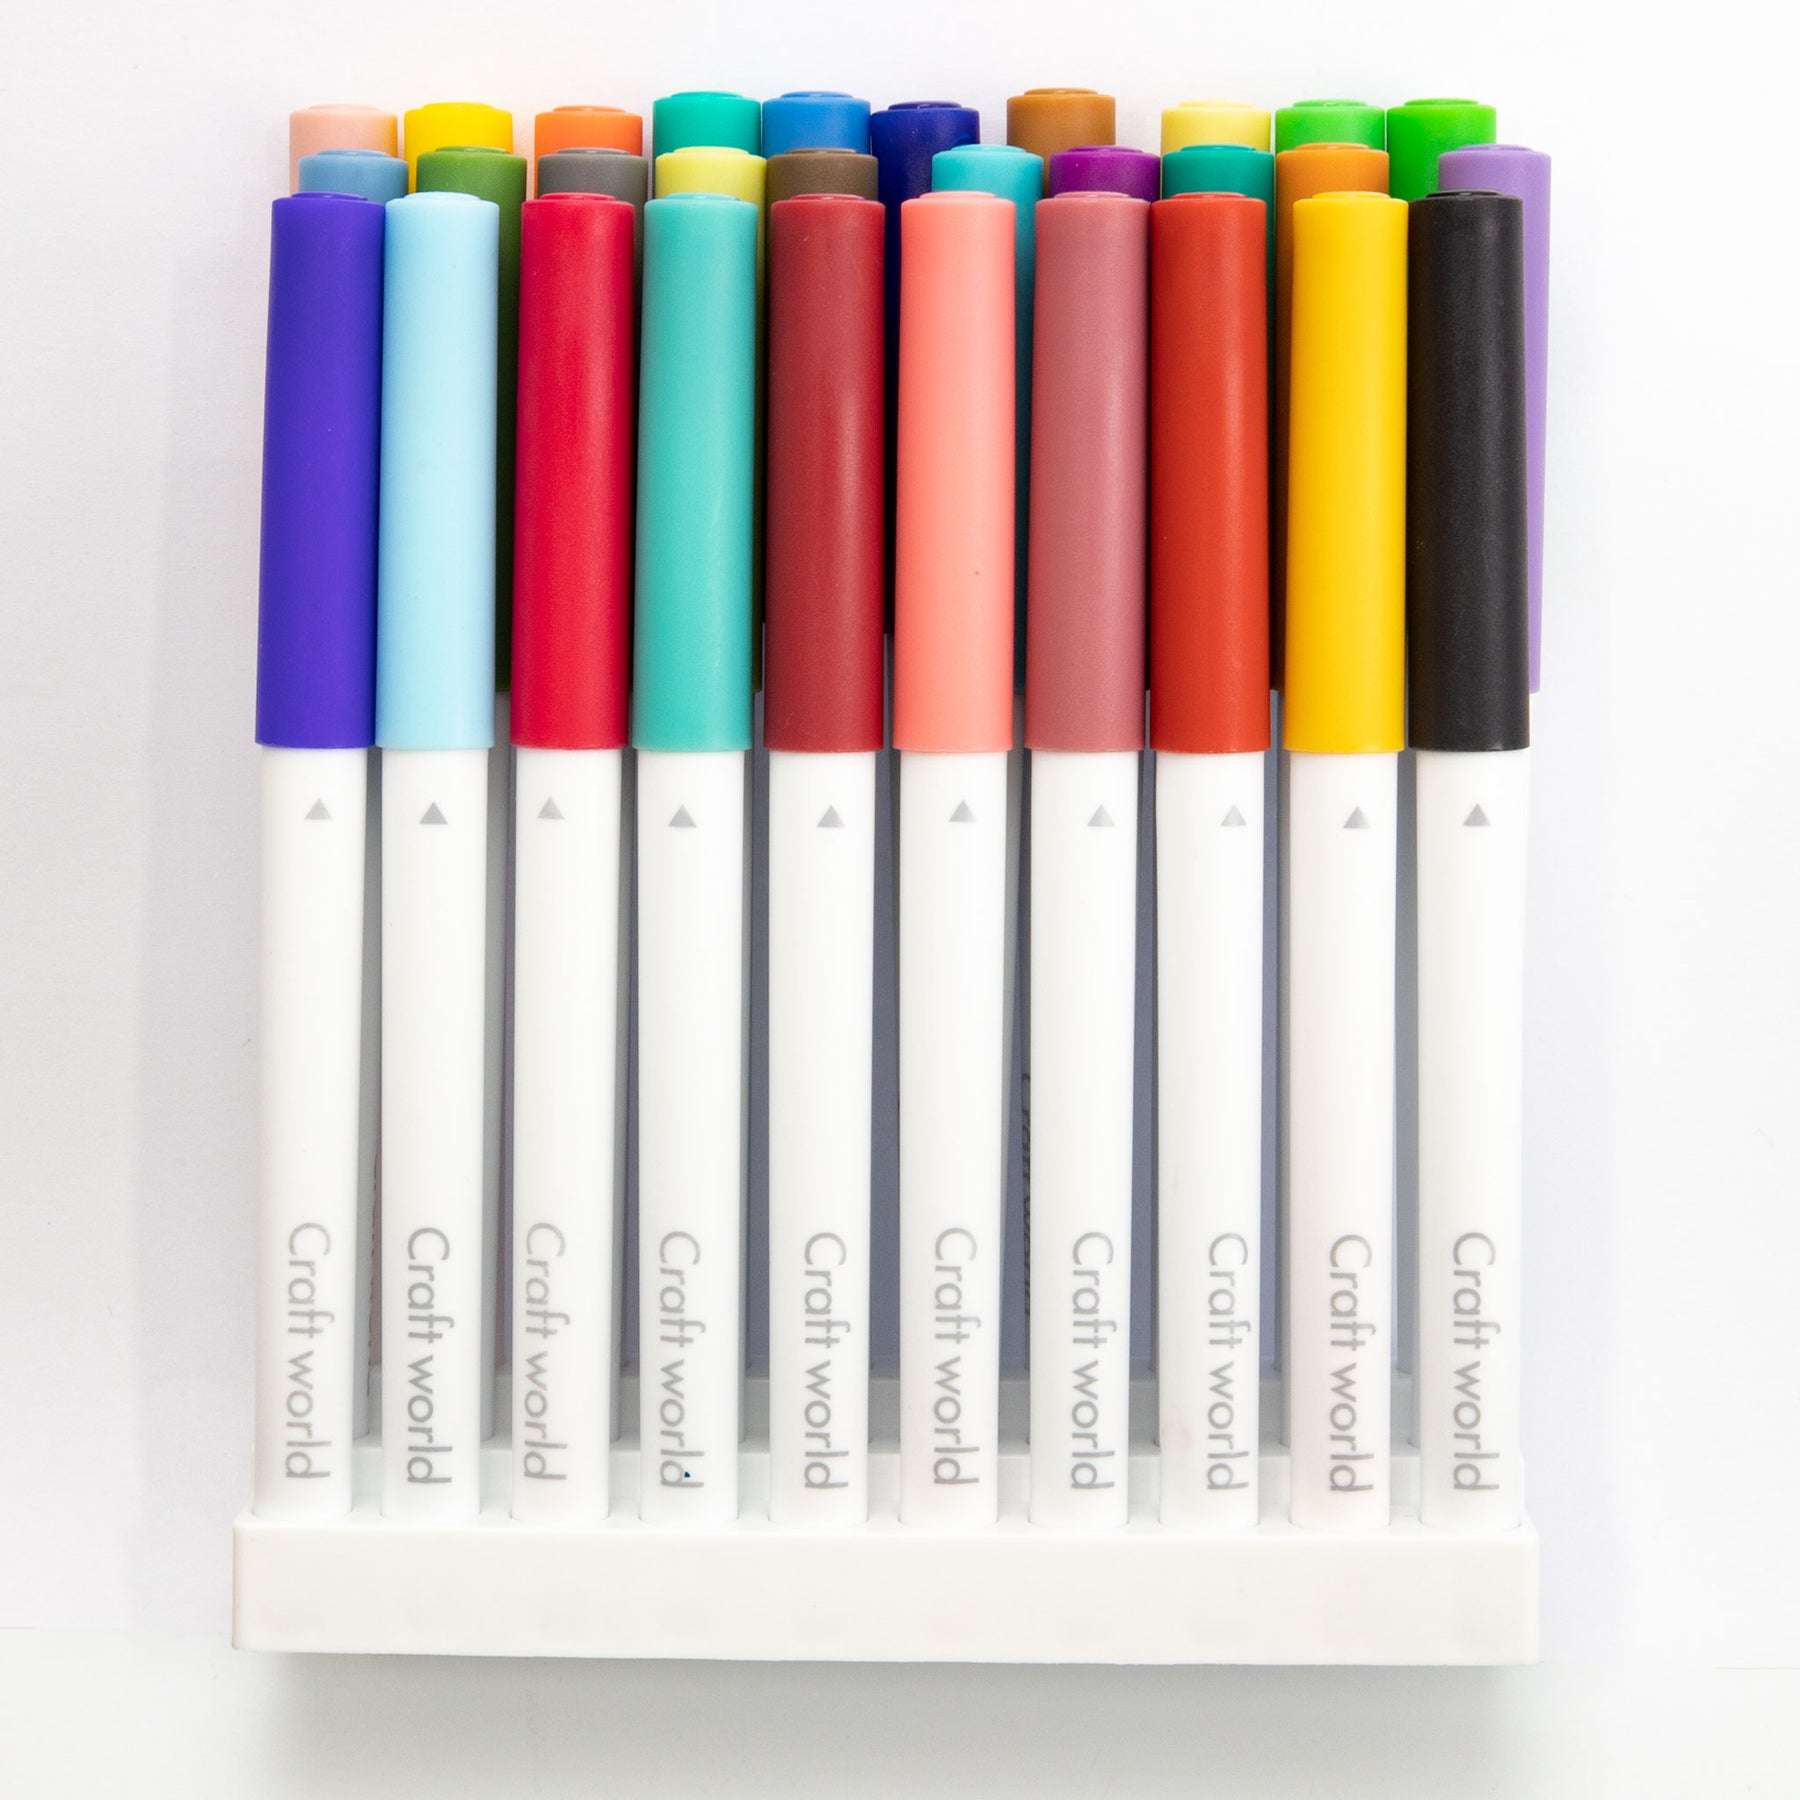  Cricut Crafting Store: Pen Sets